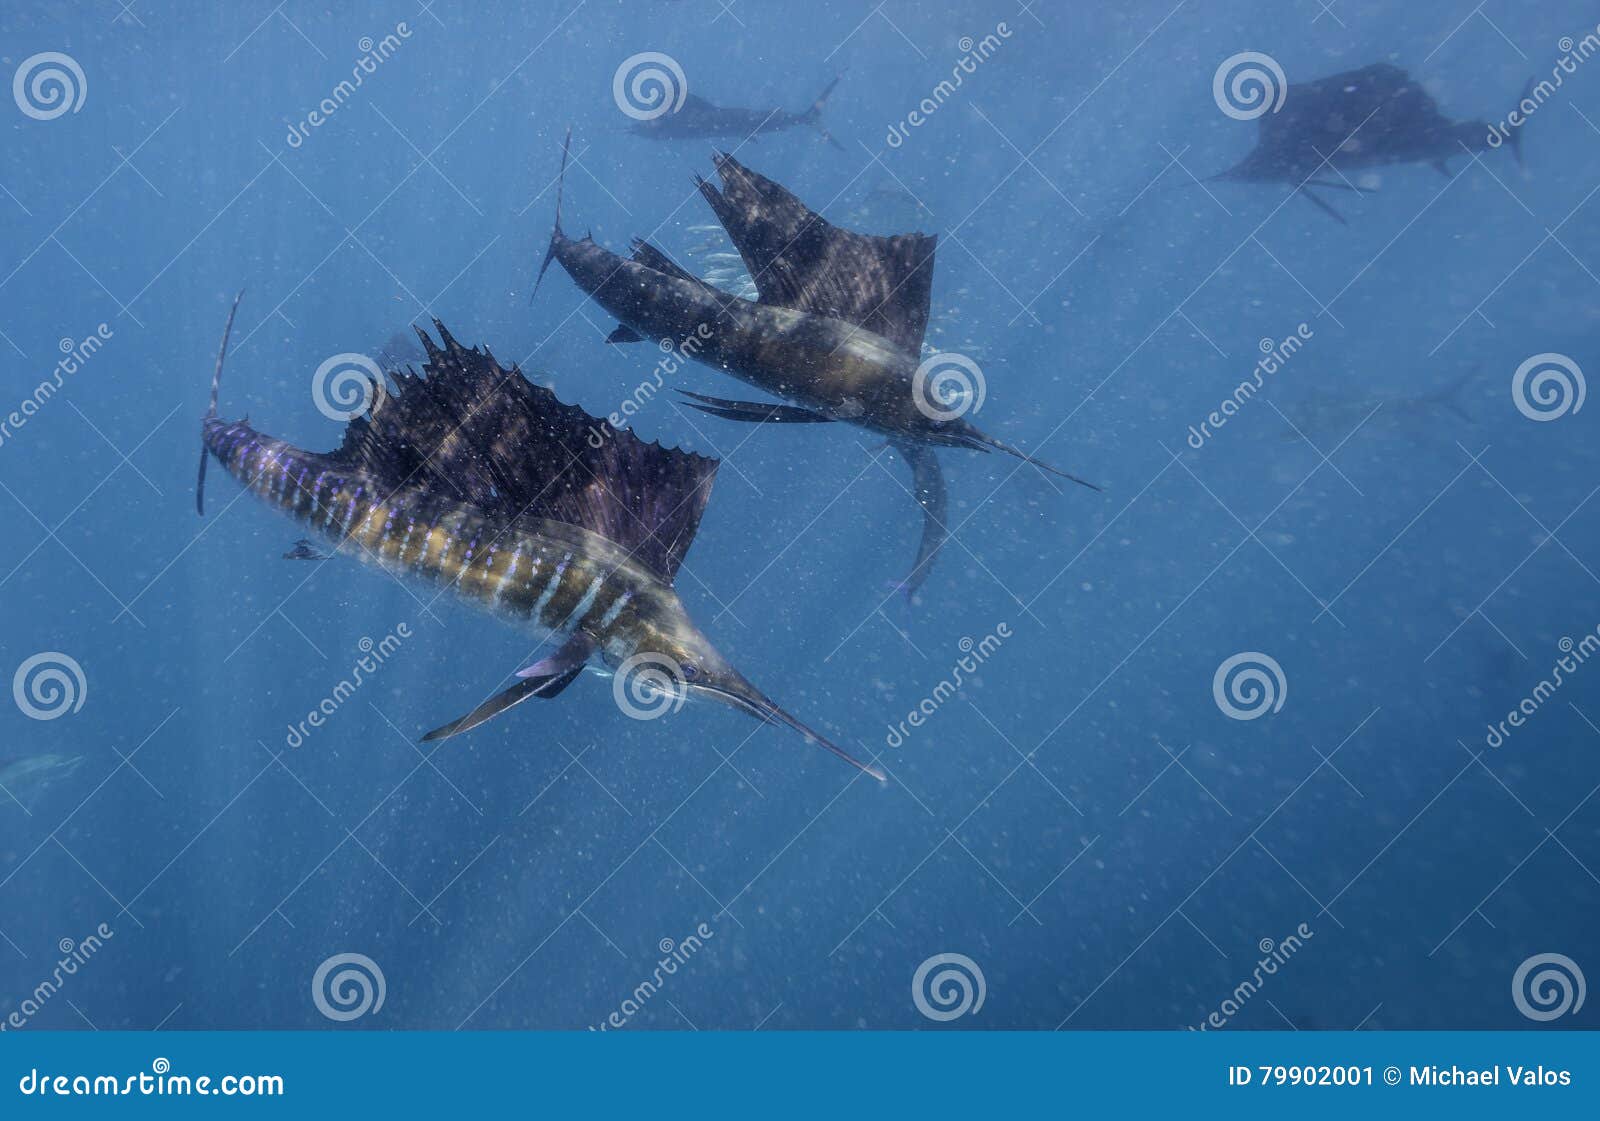 atlantic sailfish feeding on sardines, cancun mexico.